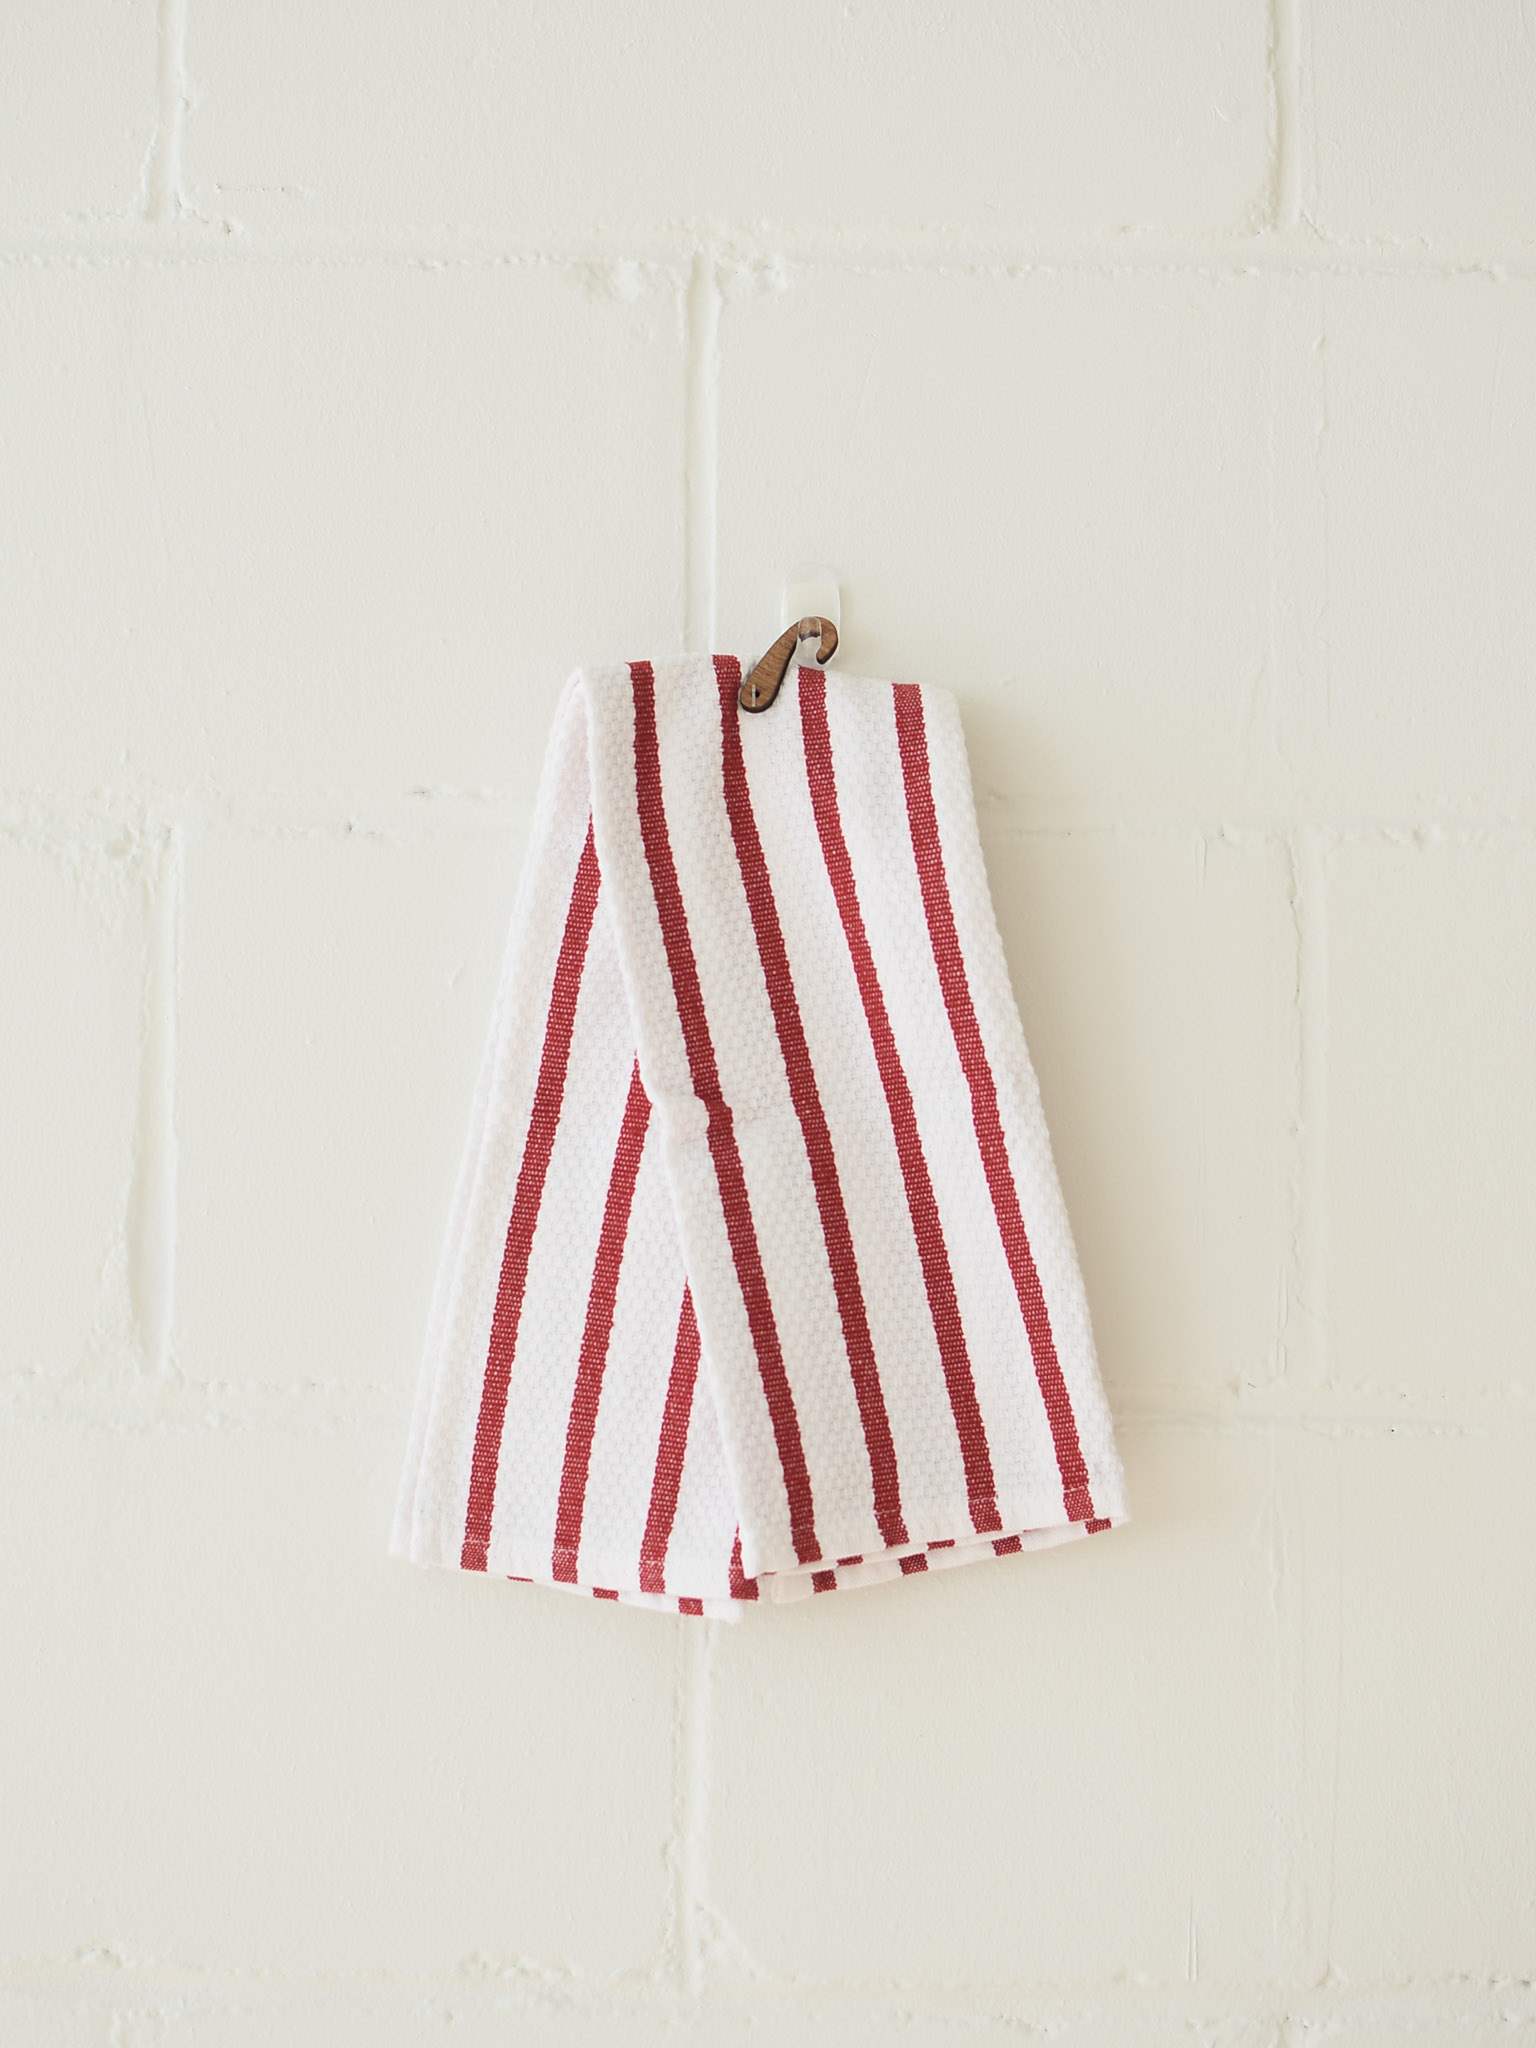 Red striped dishcloth